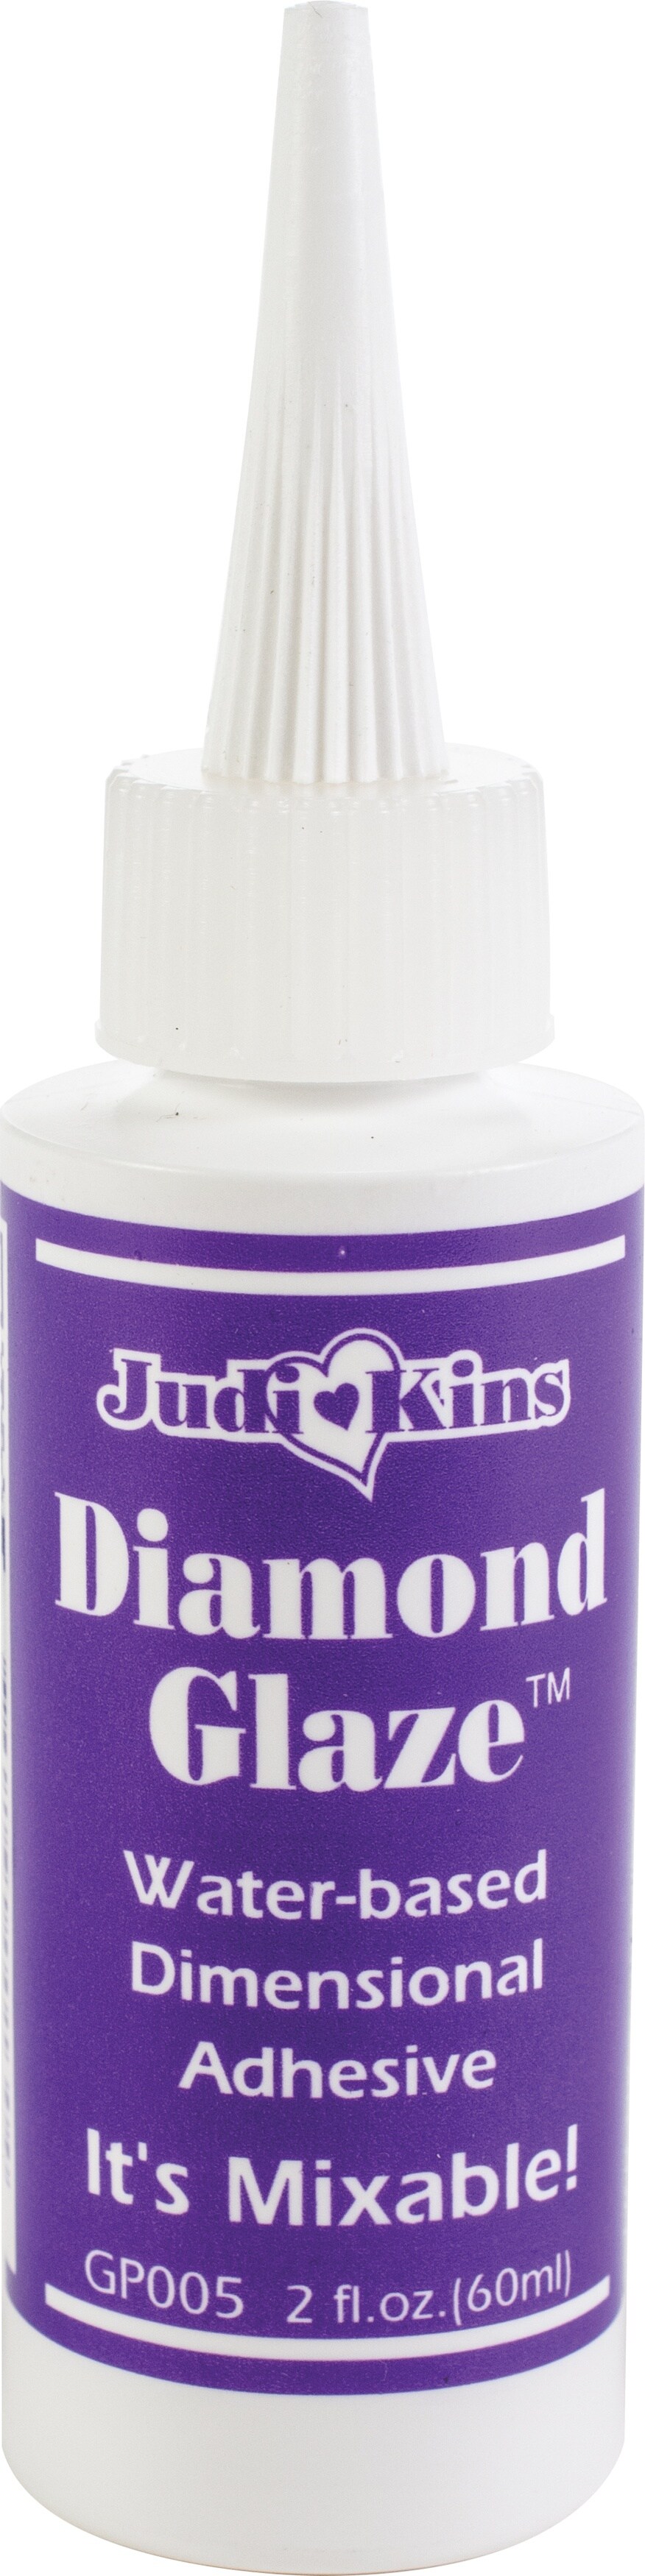 Multipack of 25 - Judikins Diamond Glaze Dimensional Adhesive 2oz